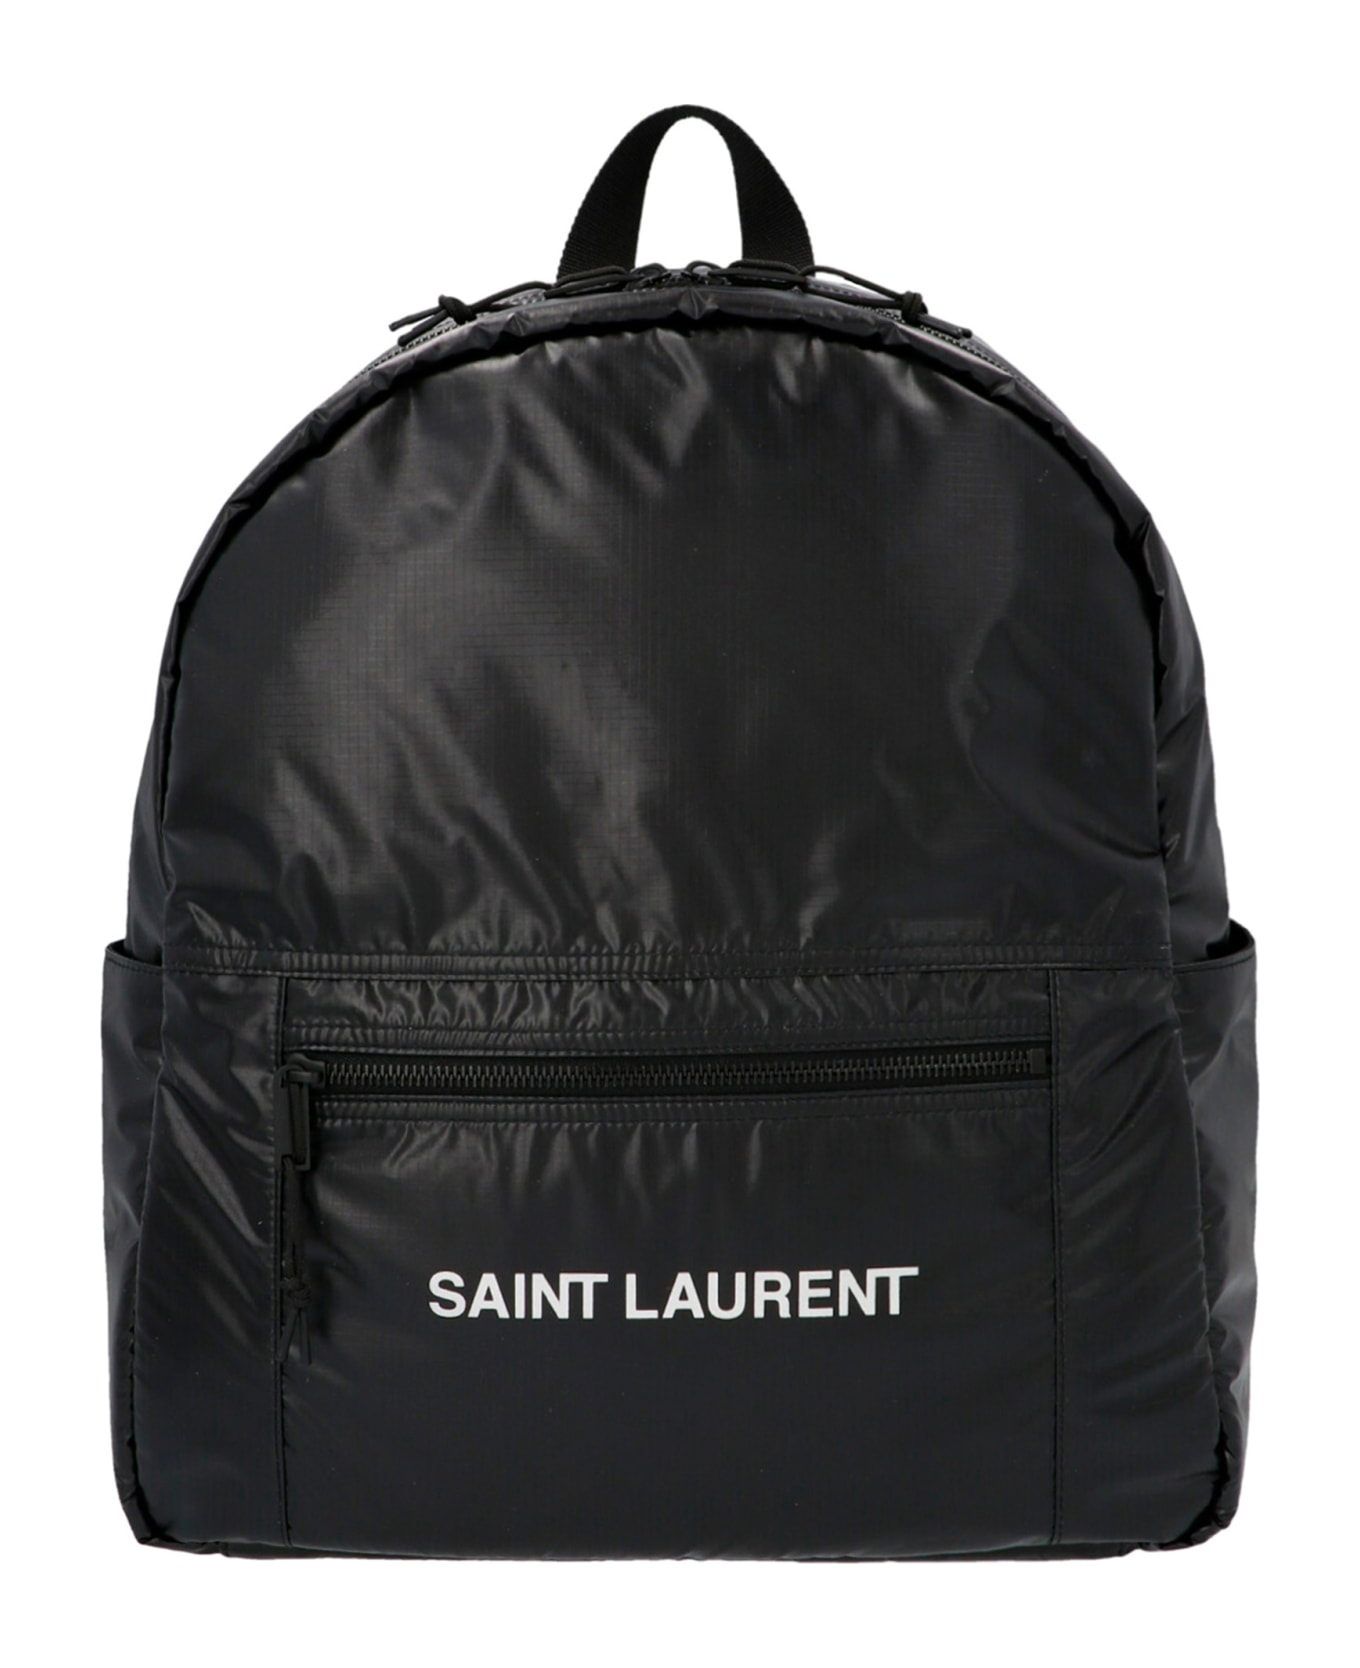 Saint Laurent Backpack - Nero/argento トラベルバッグ